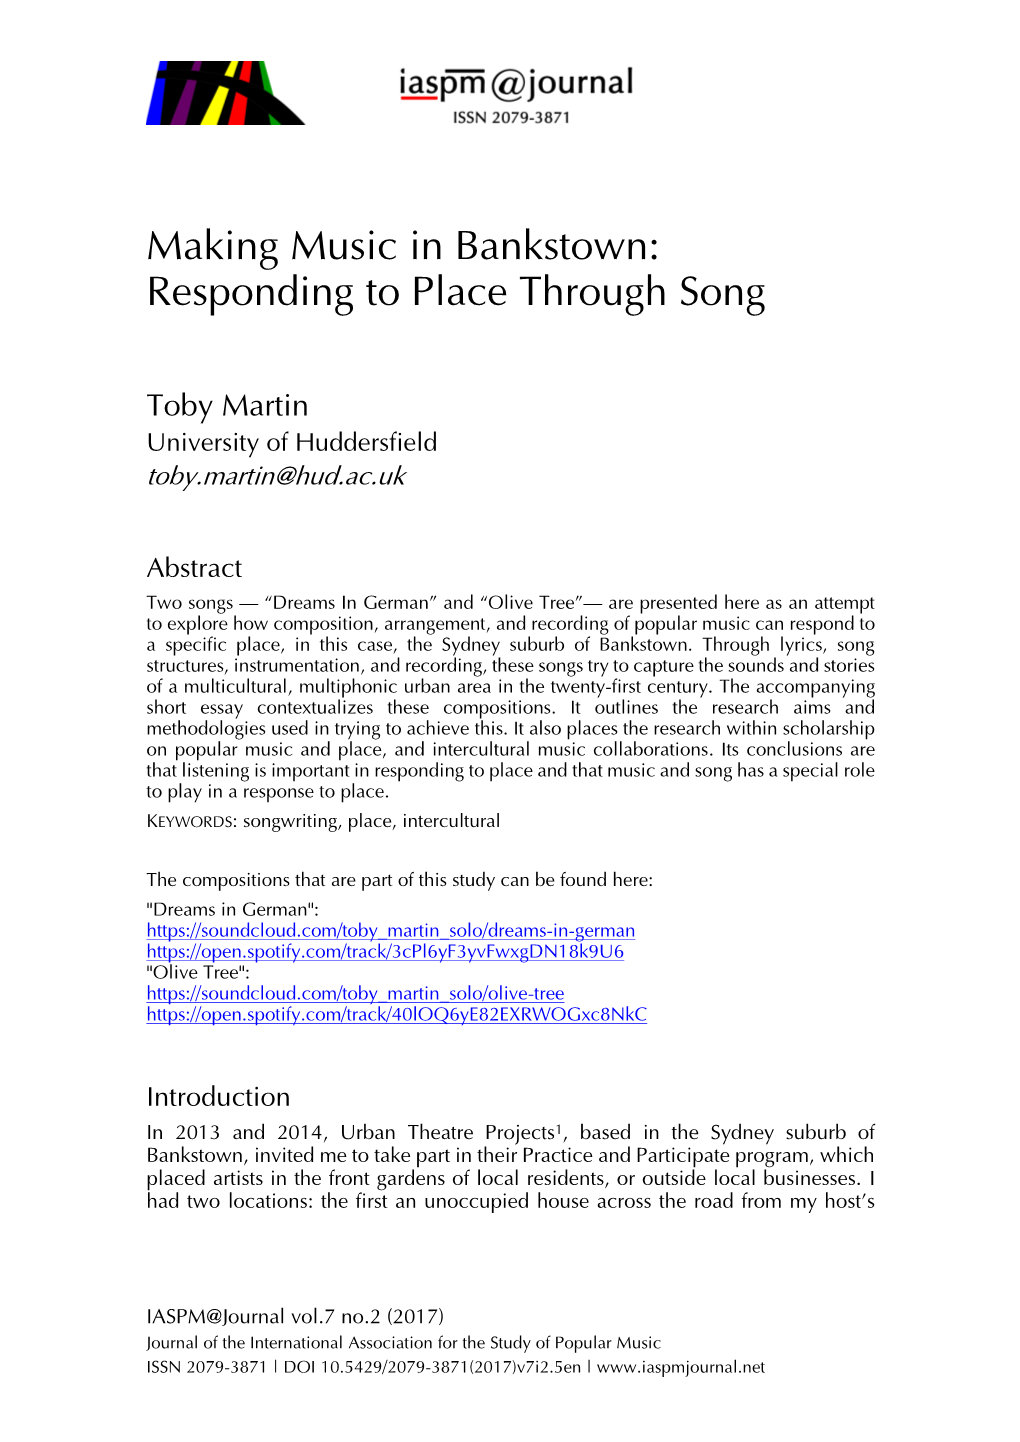 Making Music in Bankstown: Responding to Place Through Song